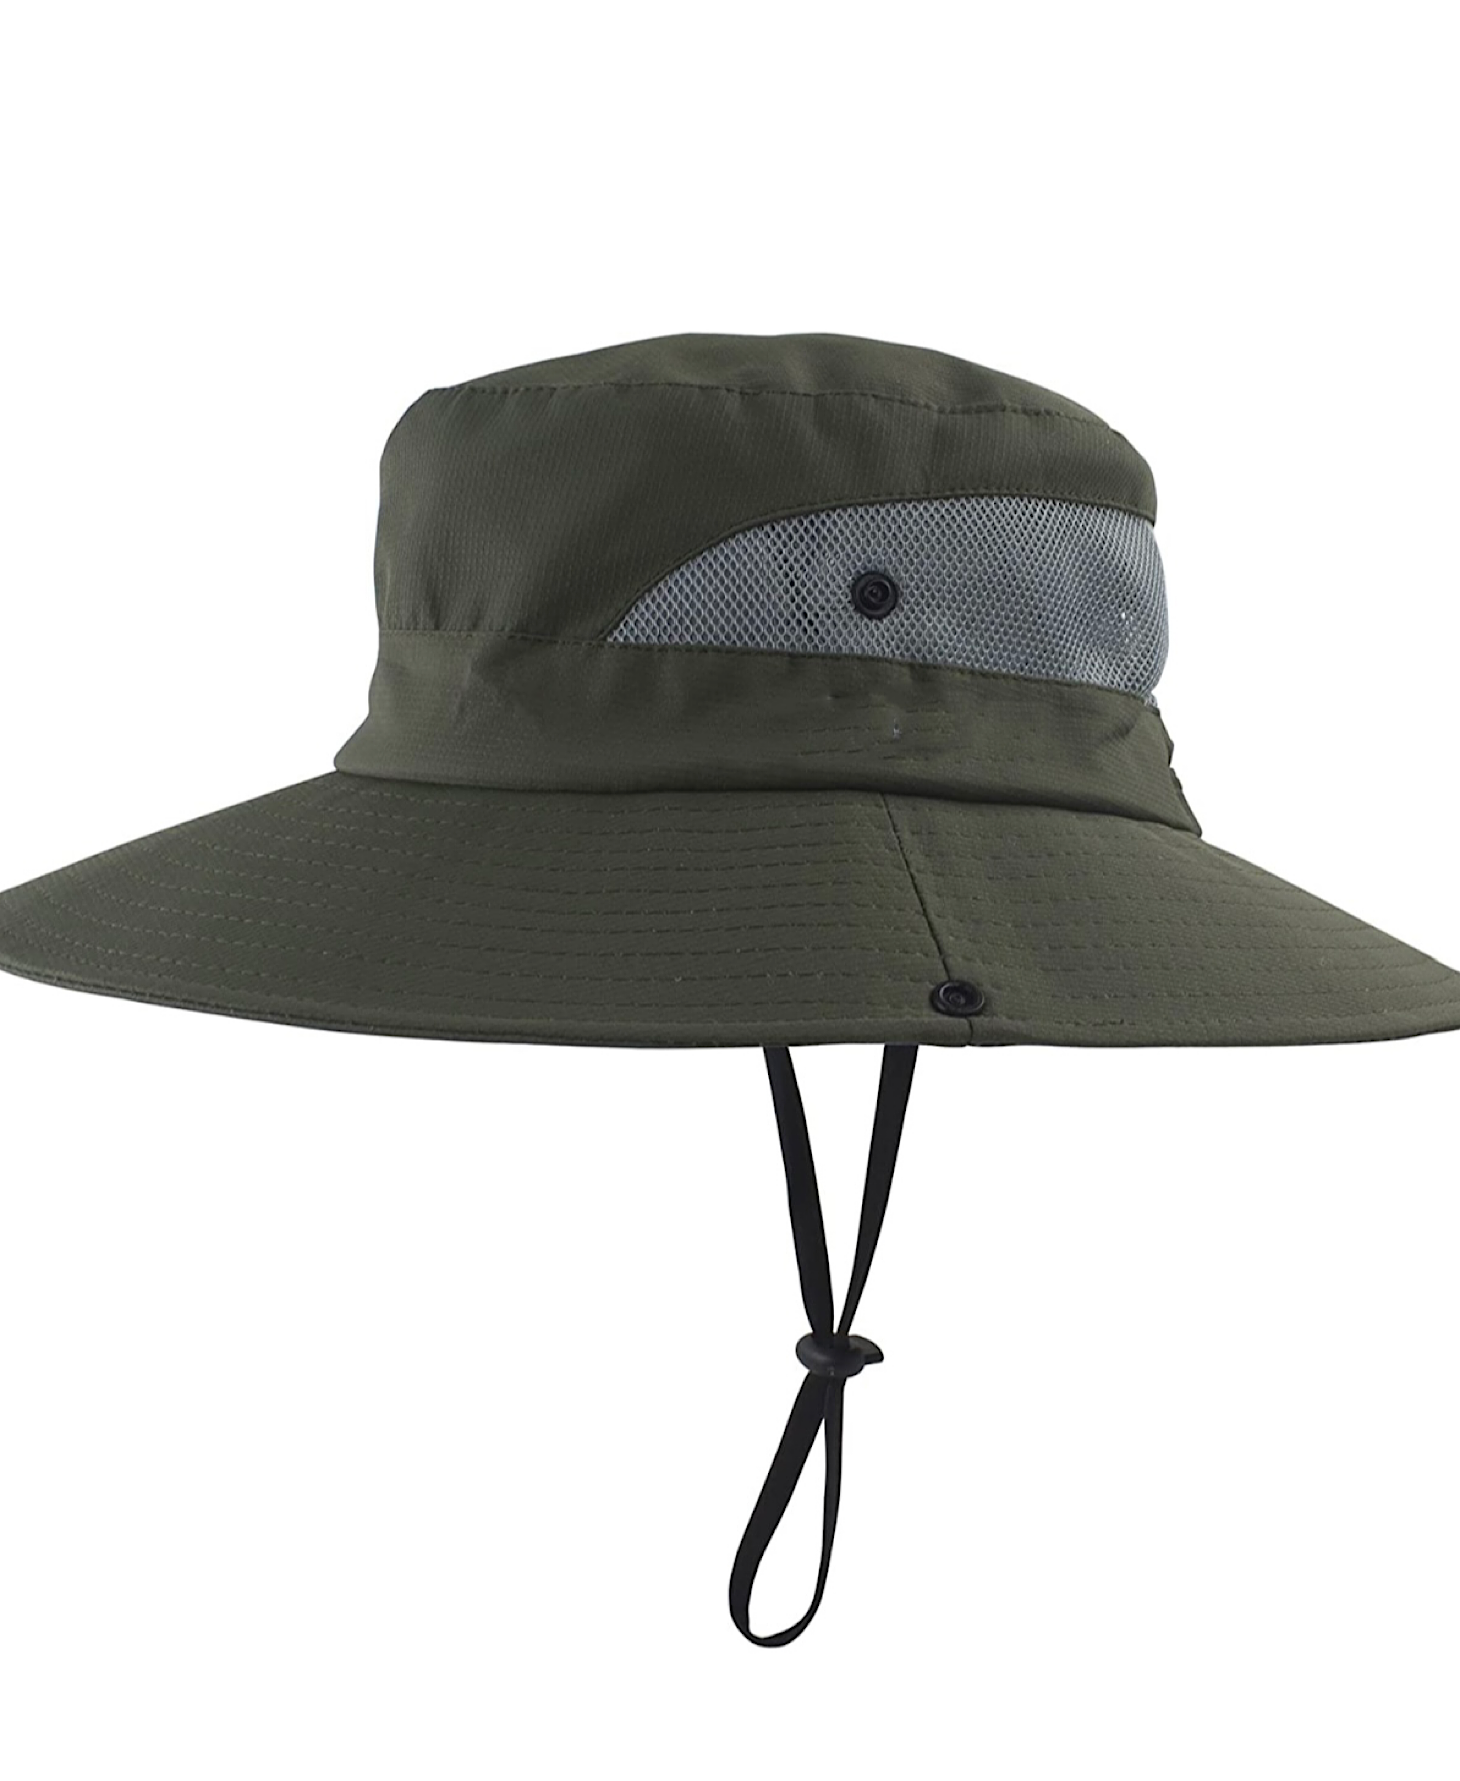 ARMY Unisex Wide Brim Hat Great fit